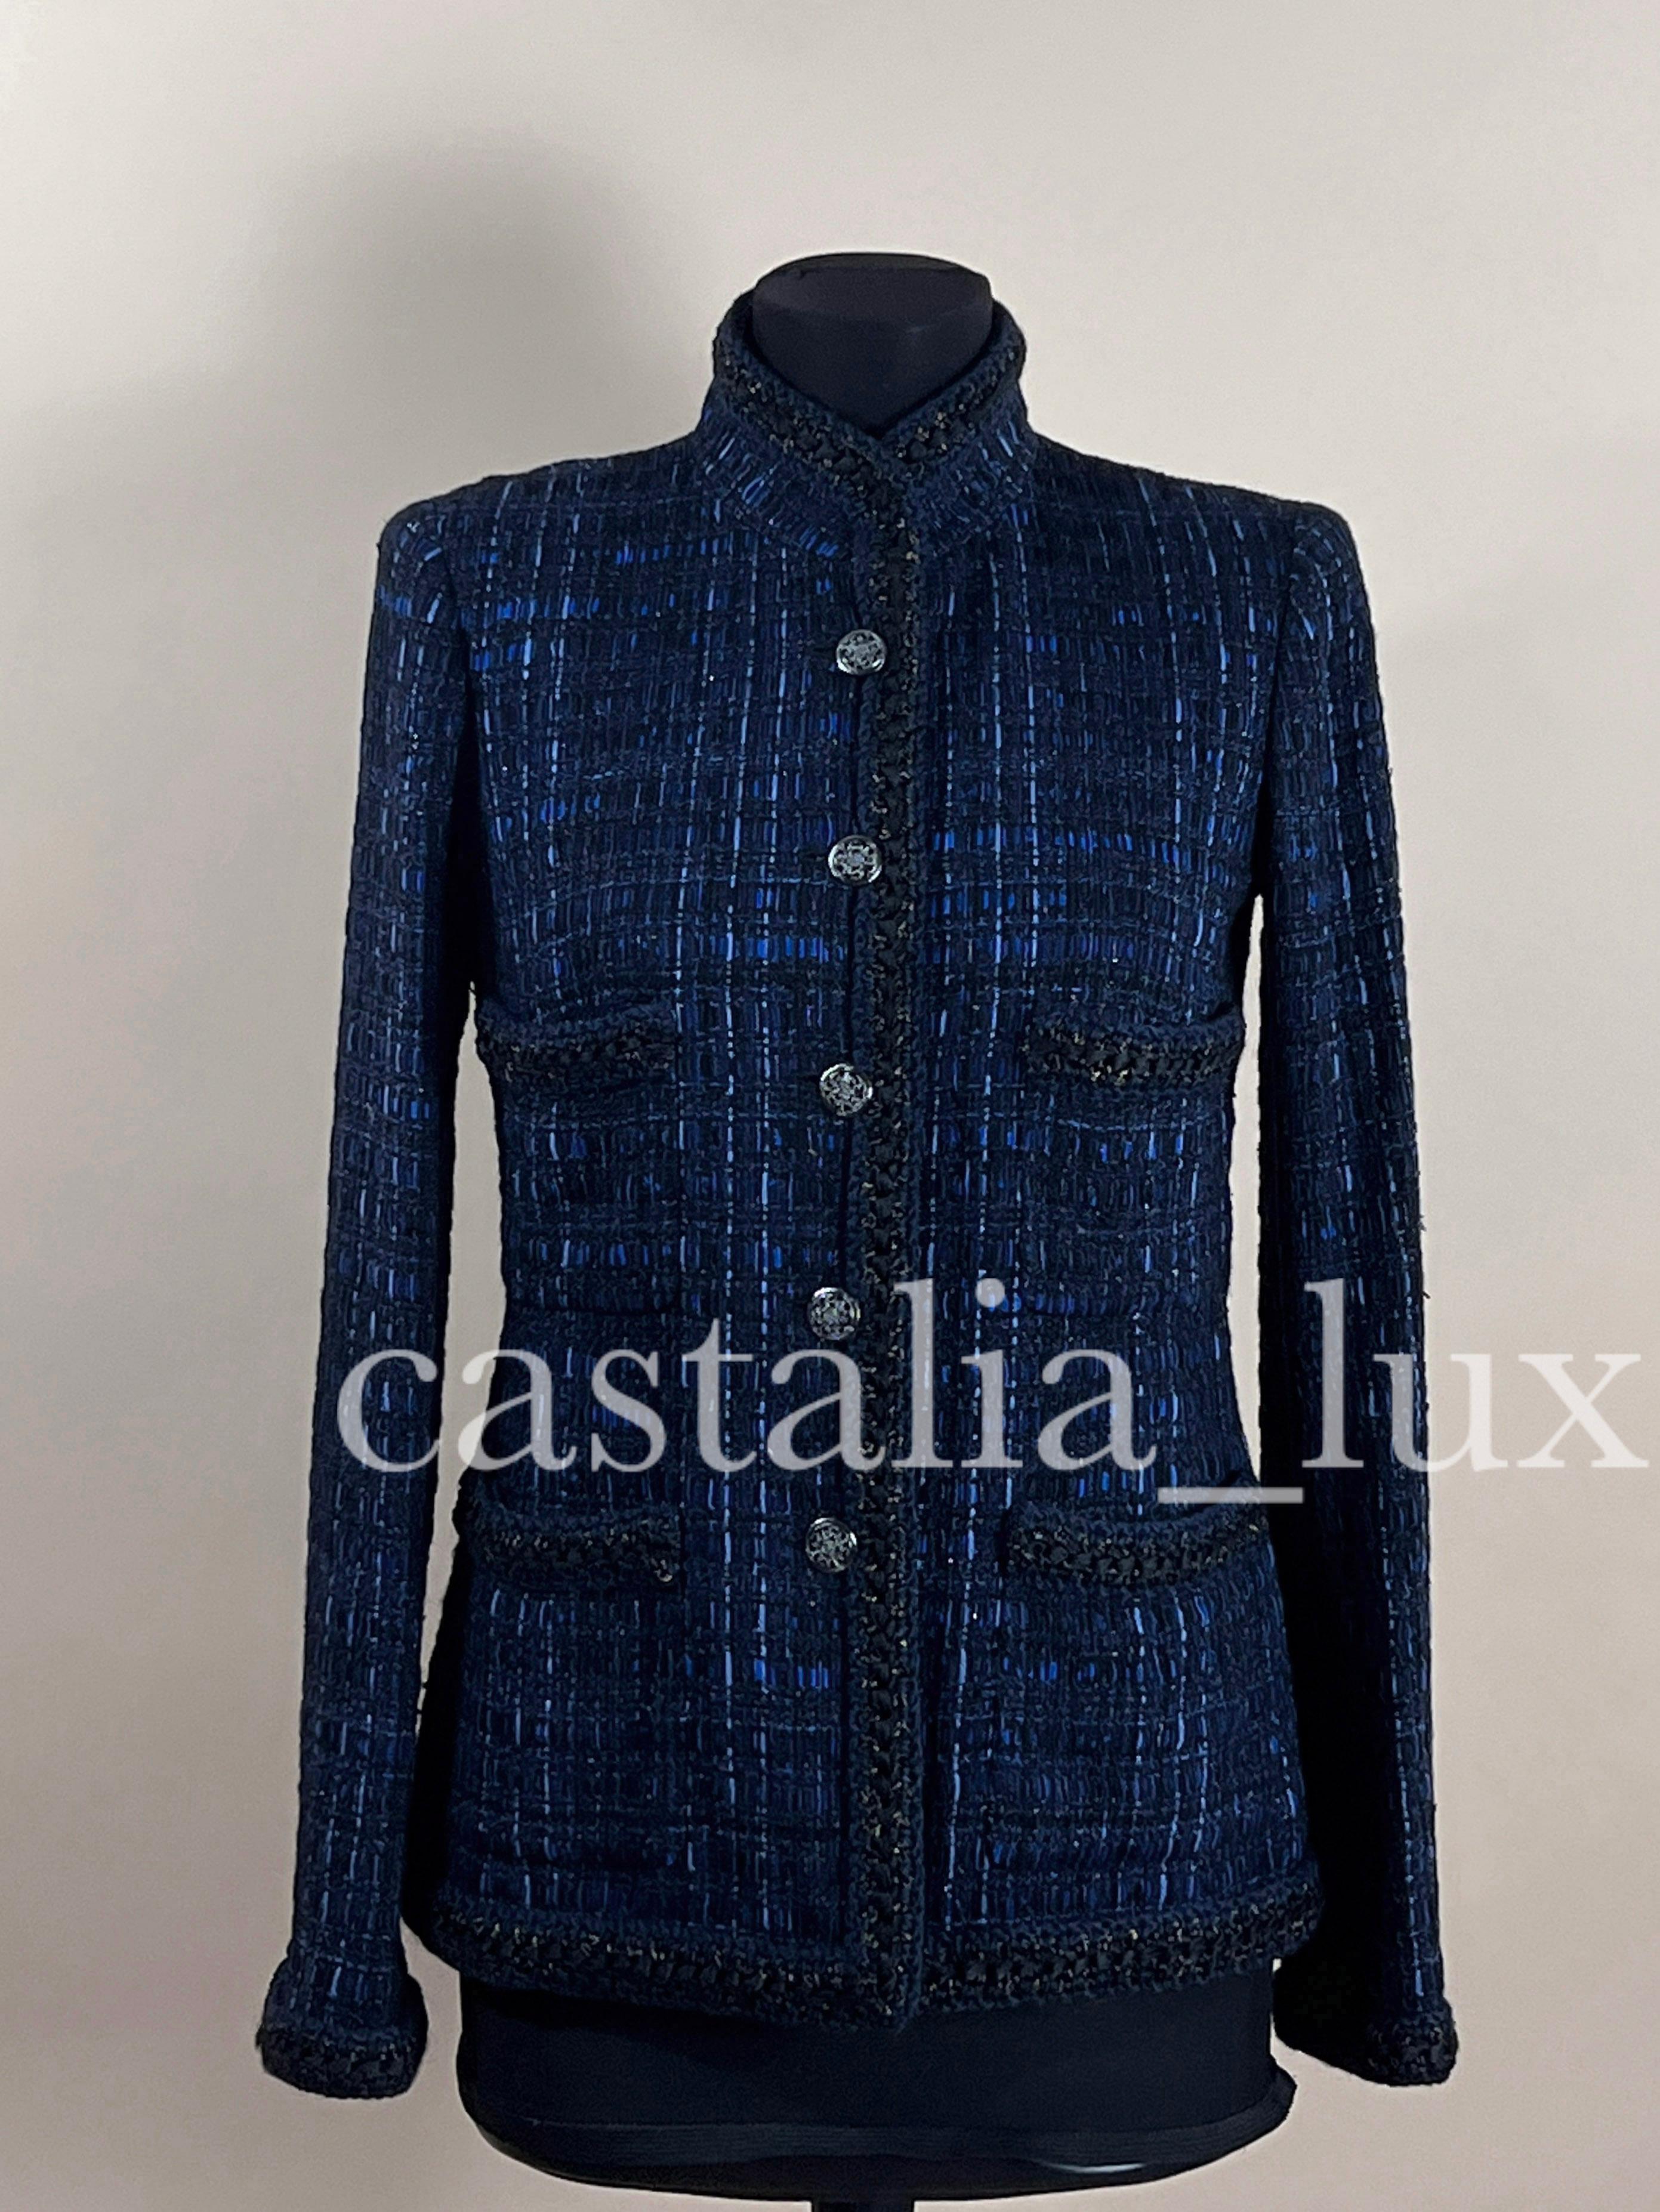 Chanel Paris / Shanghai Ribbon Tweed Jacket 4